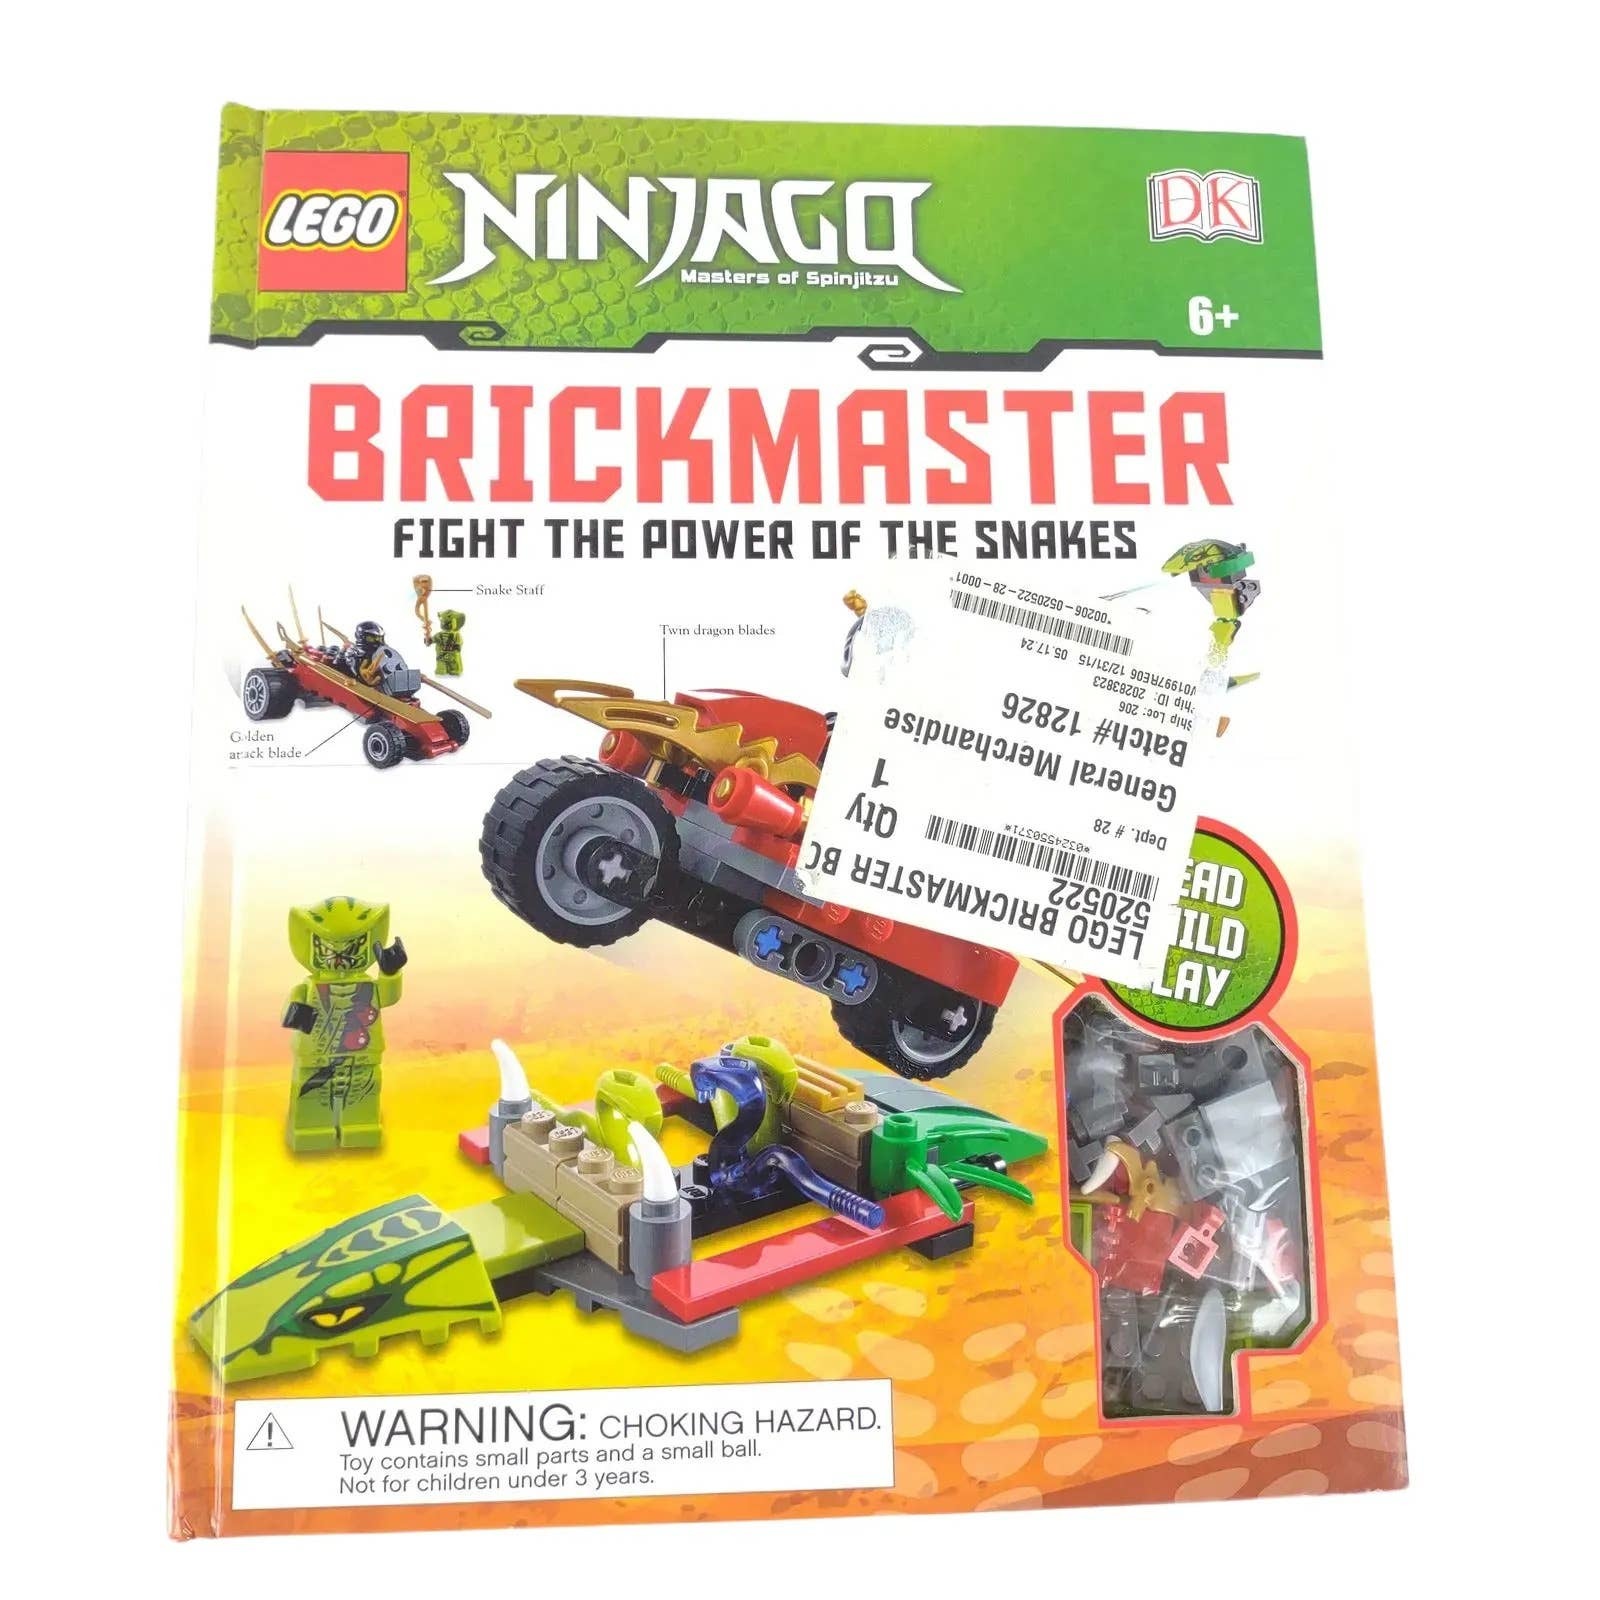 LEGO Ninjago Brickmaster Fight the Power of the Snakes Book & Bricks Sealed New - $19.35